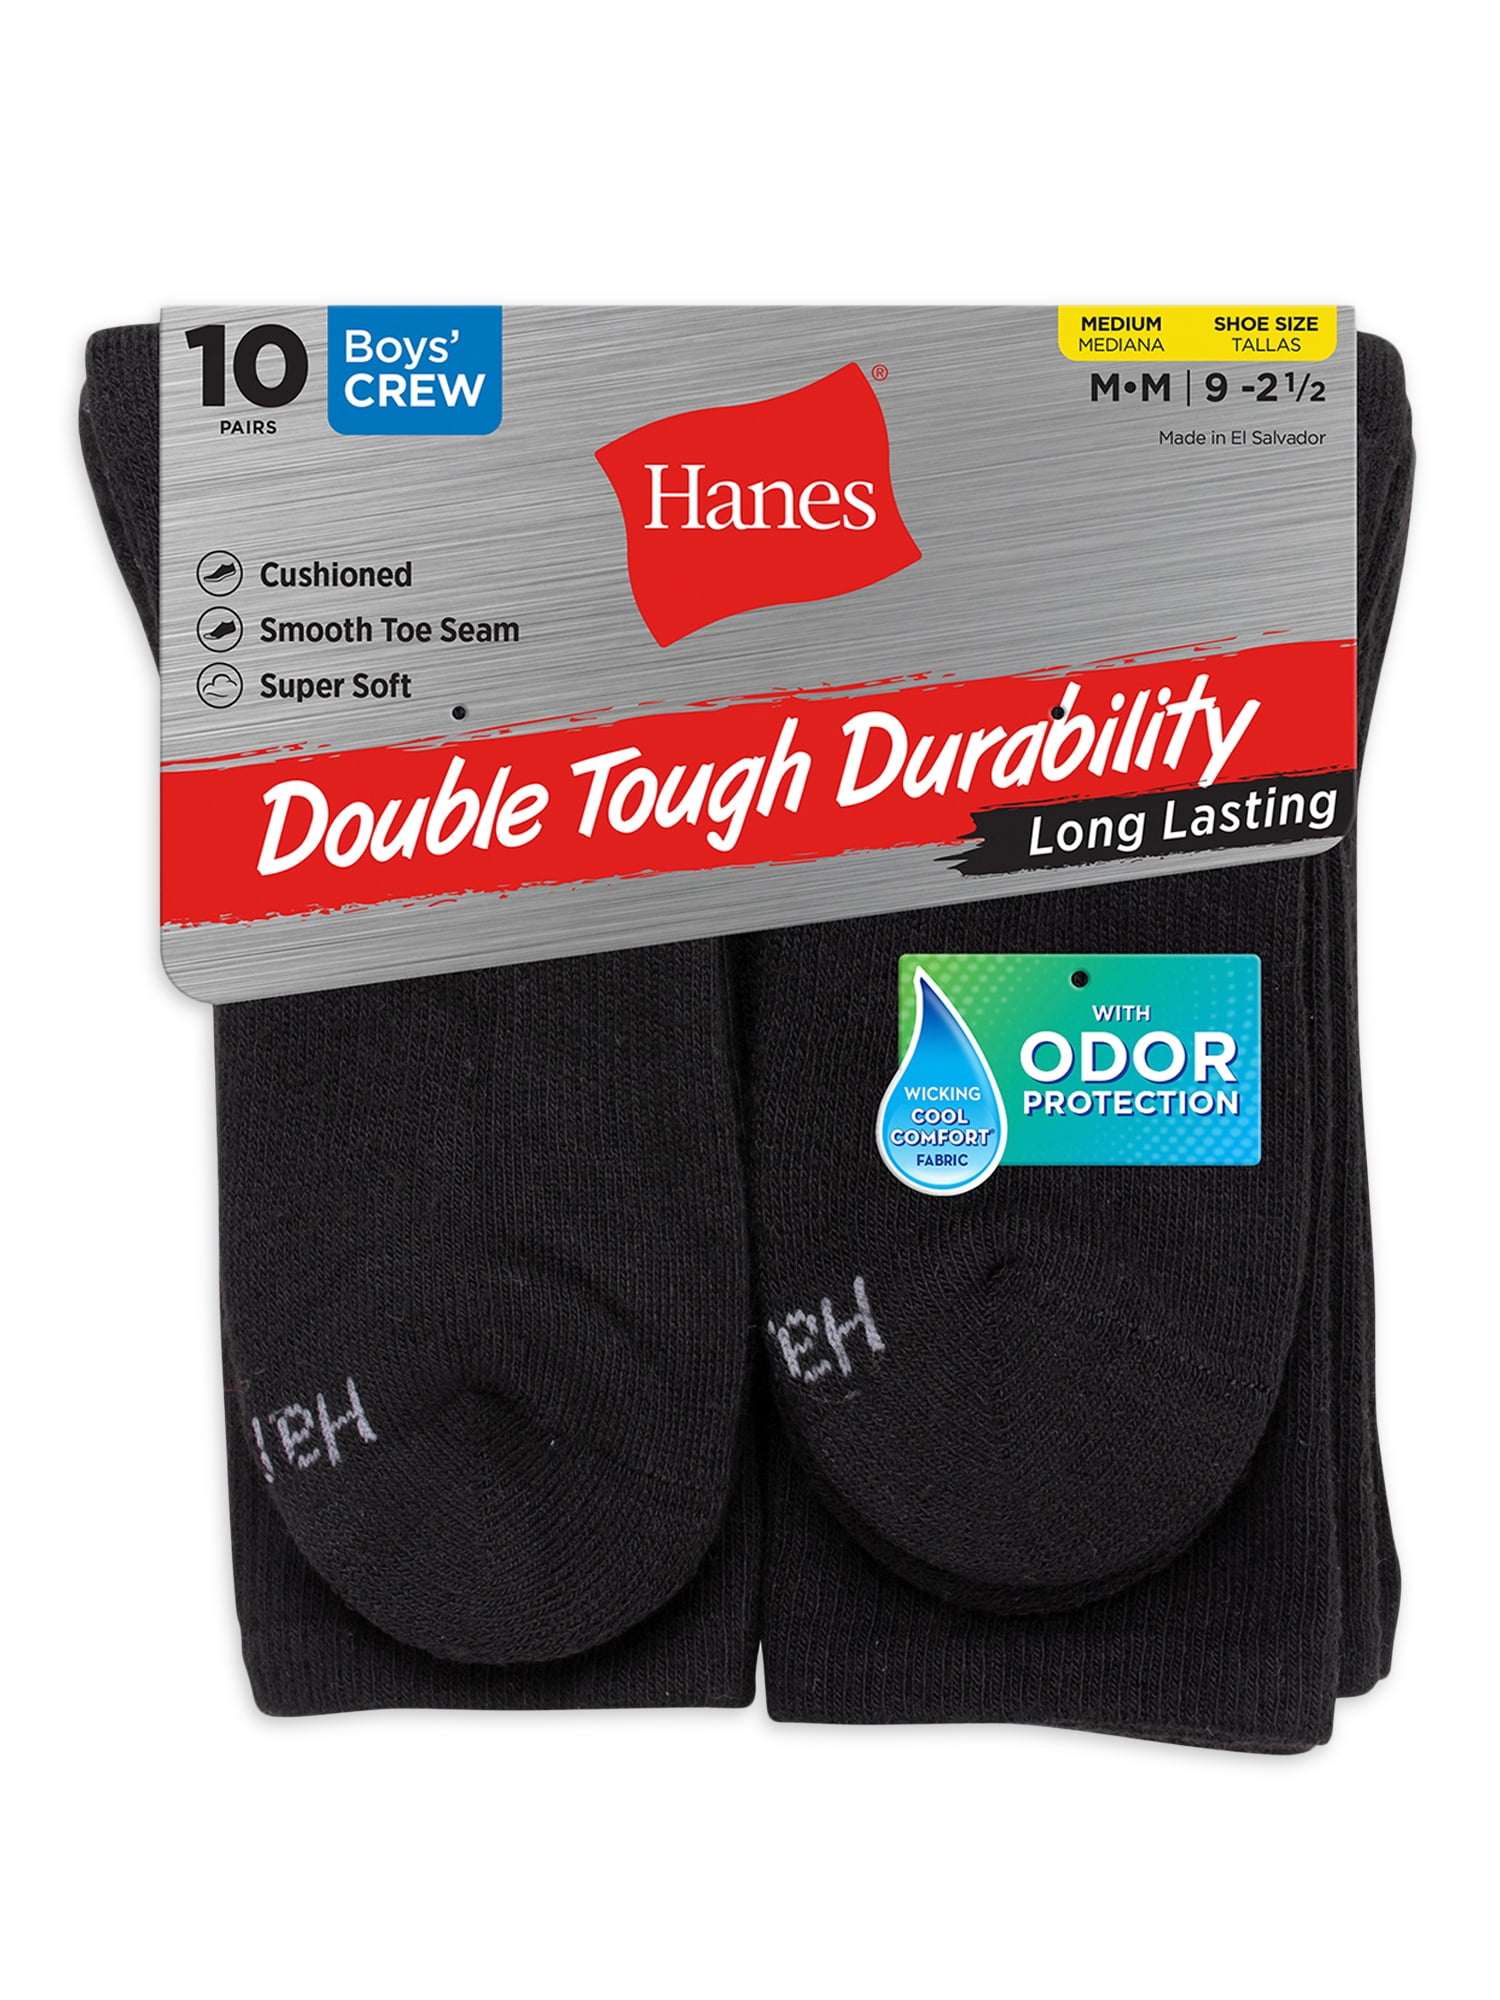 Hanes Boys' Double Tough Durability Ankle Socks 10-Pack